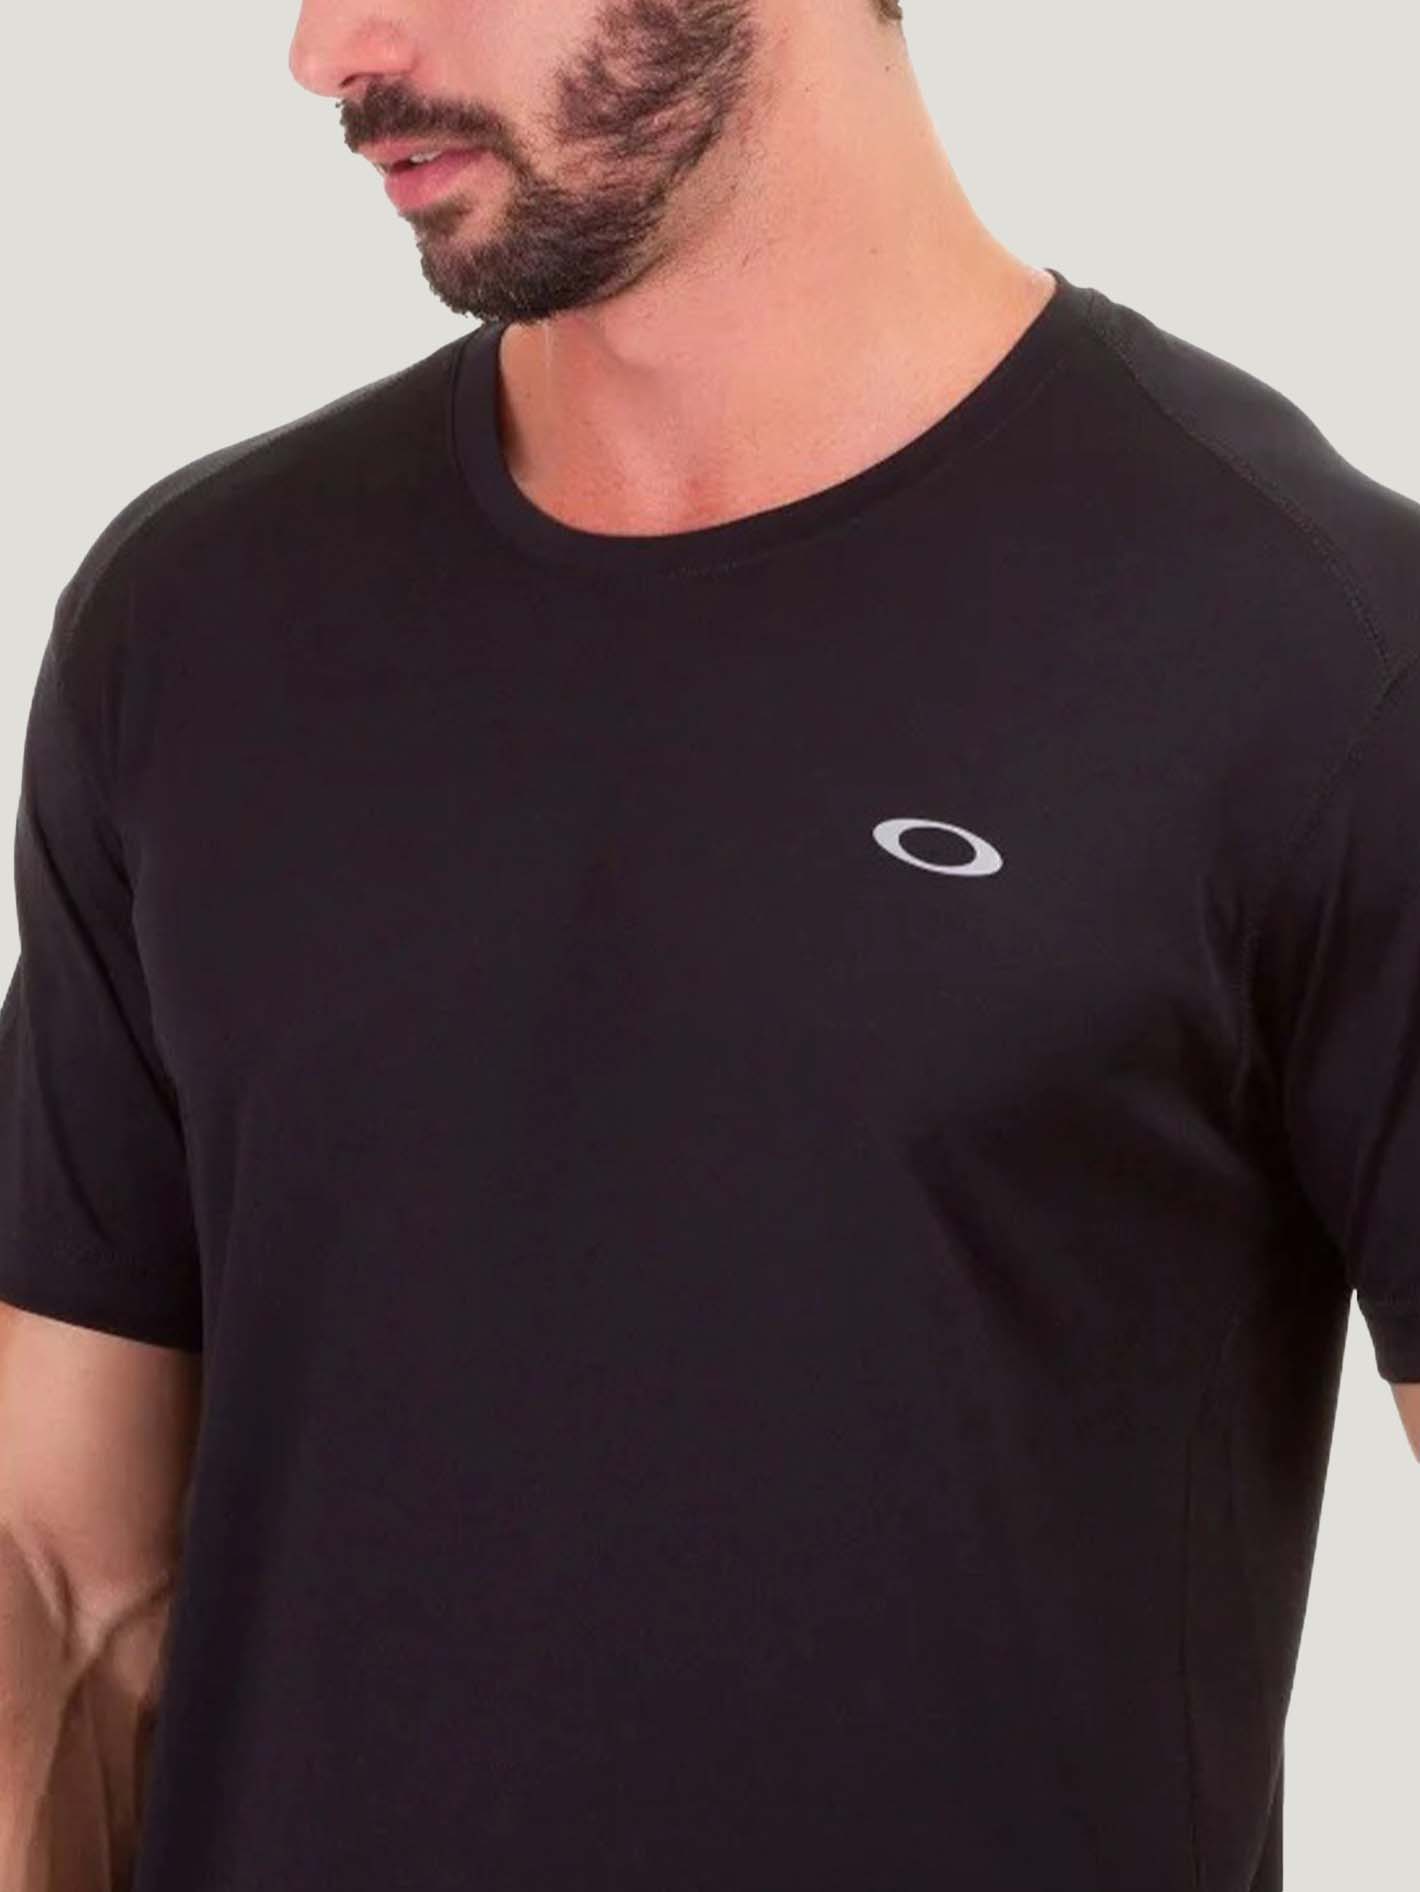 Camiseta Oakley Daily Sport Branca Masculina - 457426br-100